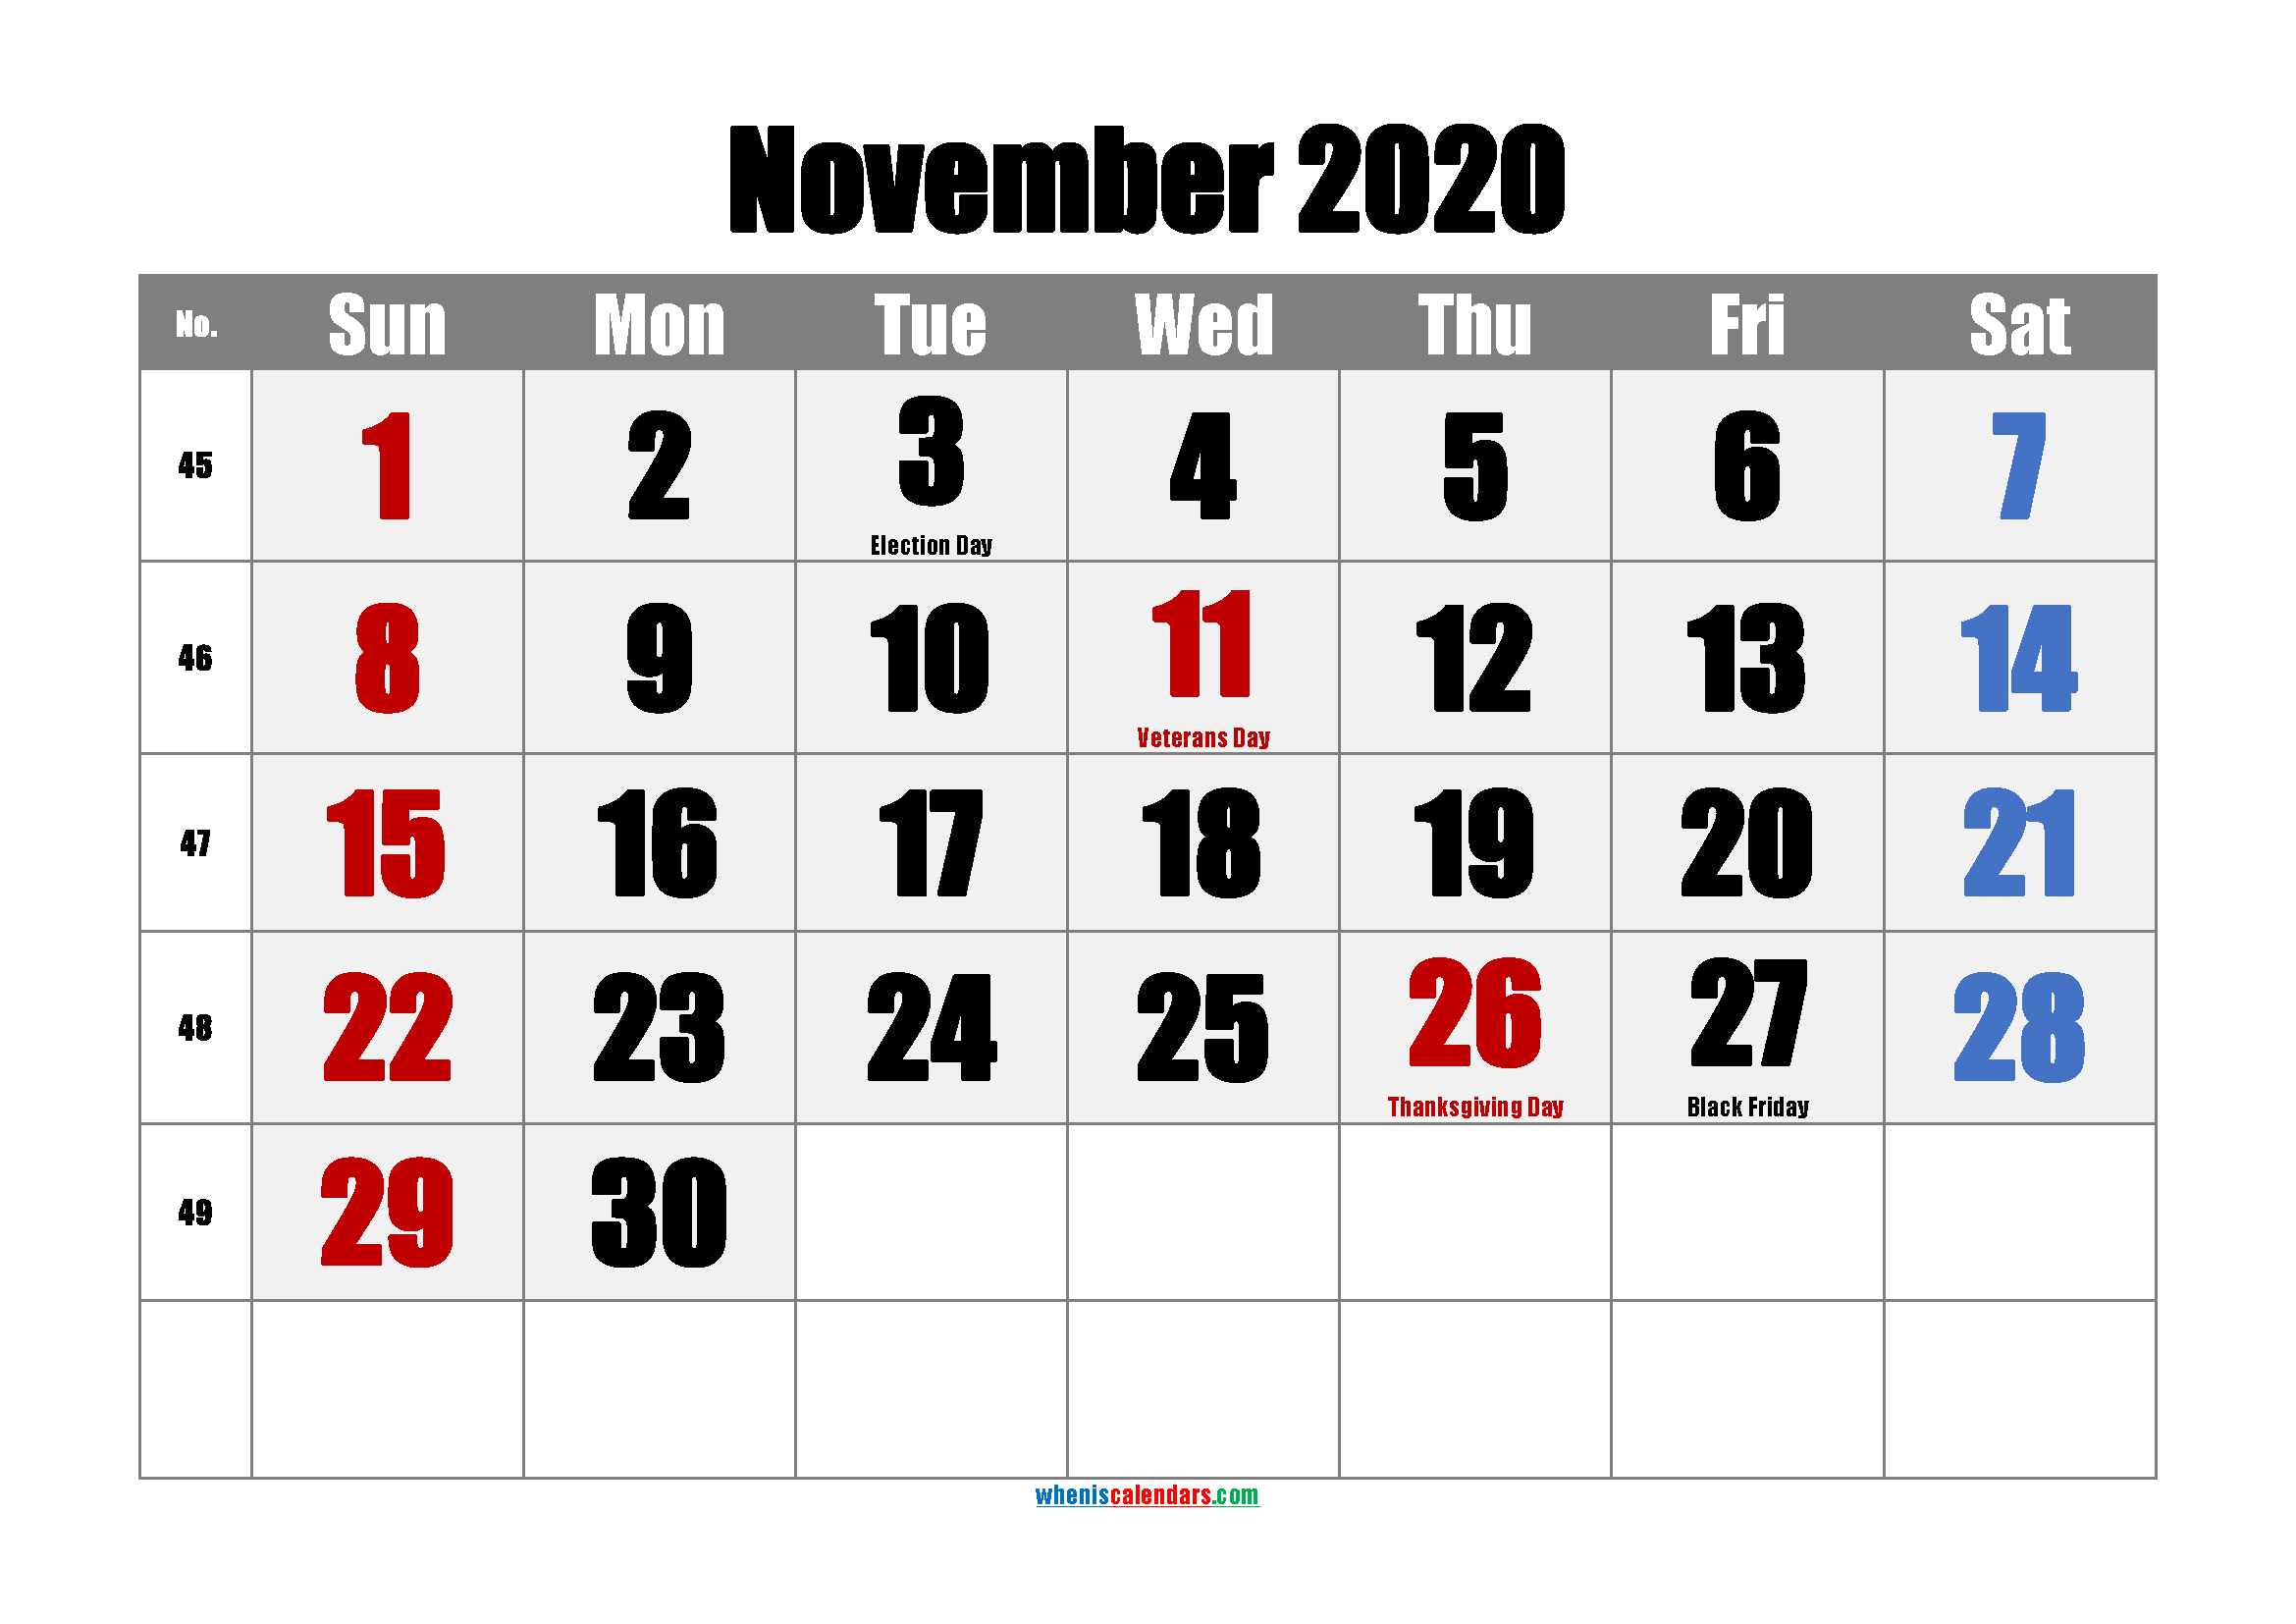 NOVEMBER 2020 Printable Calendar with Holidays